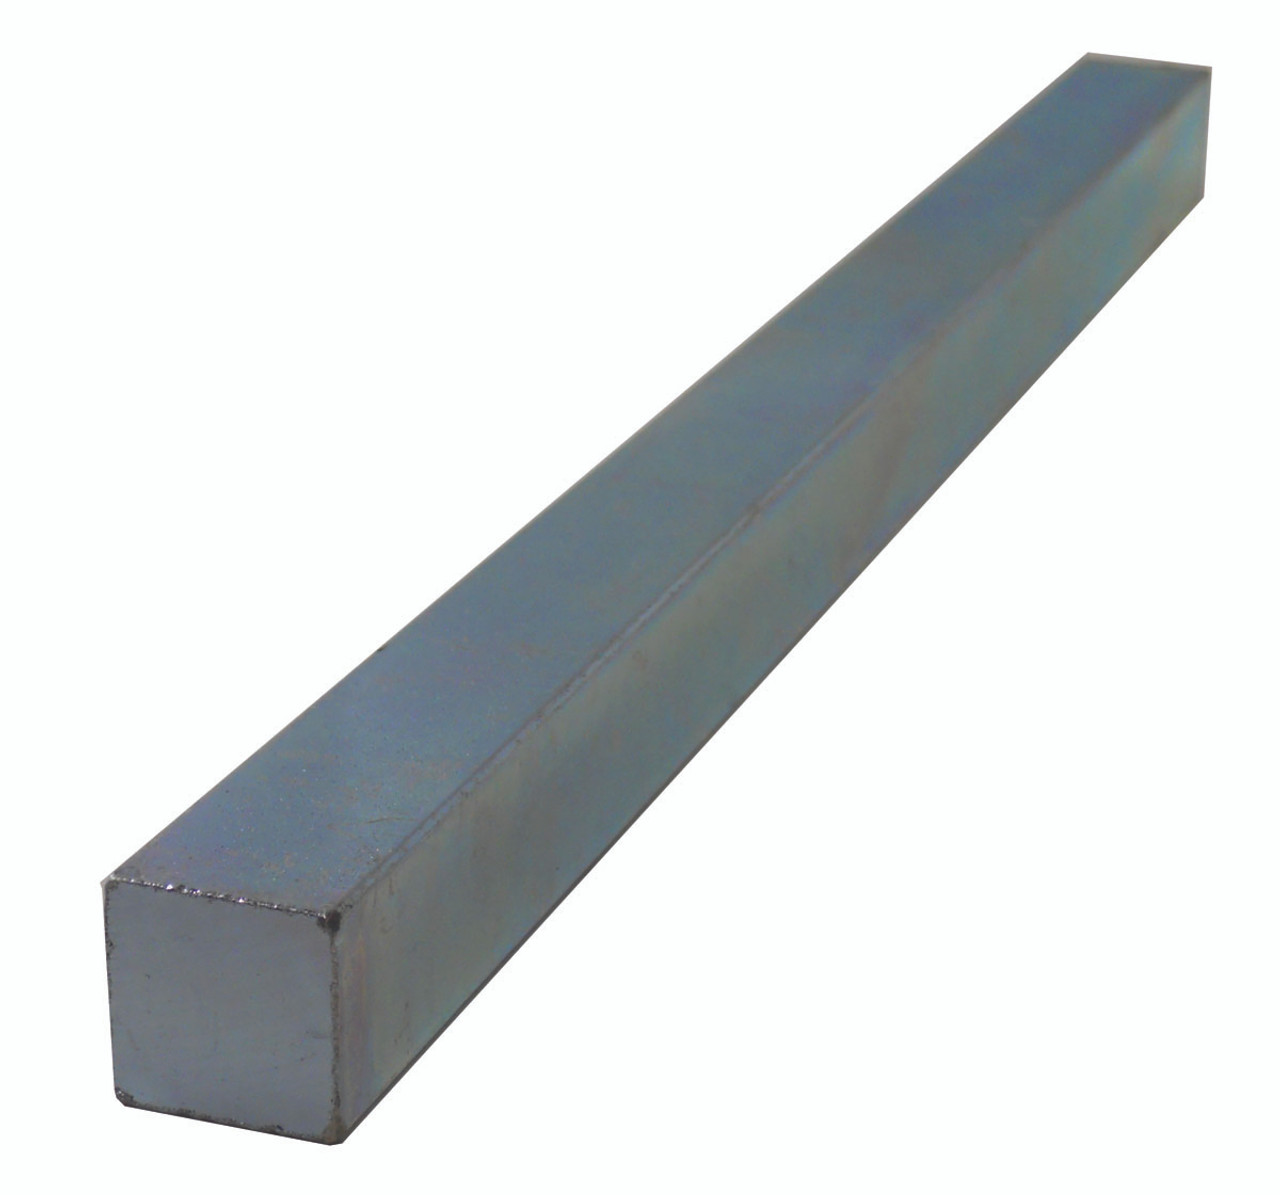 Square SAE 3/16 x 36" Zinc Plated Steel Keystock  .188-36